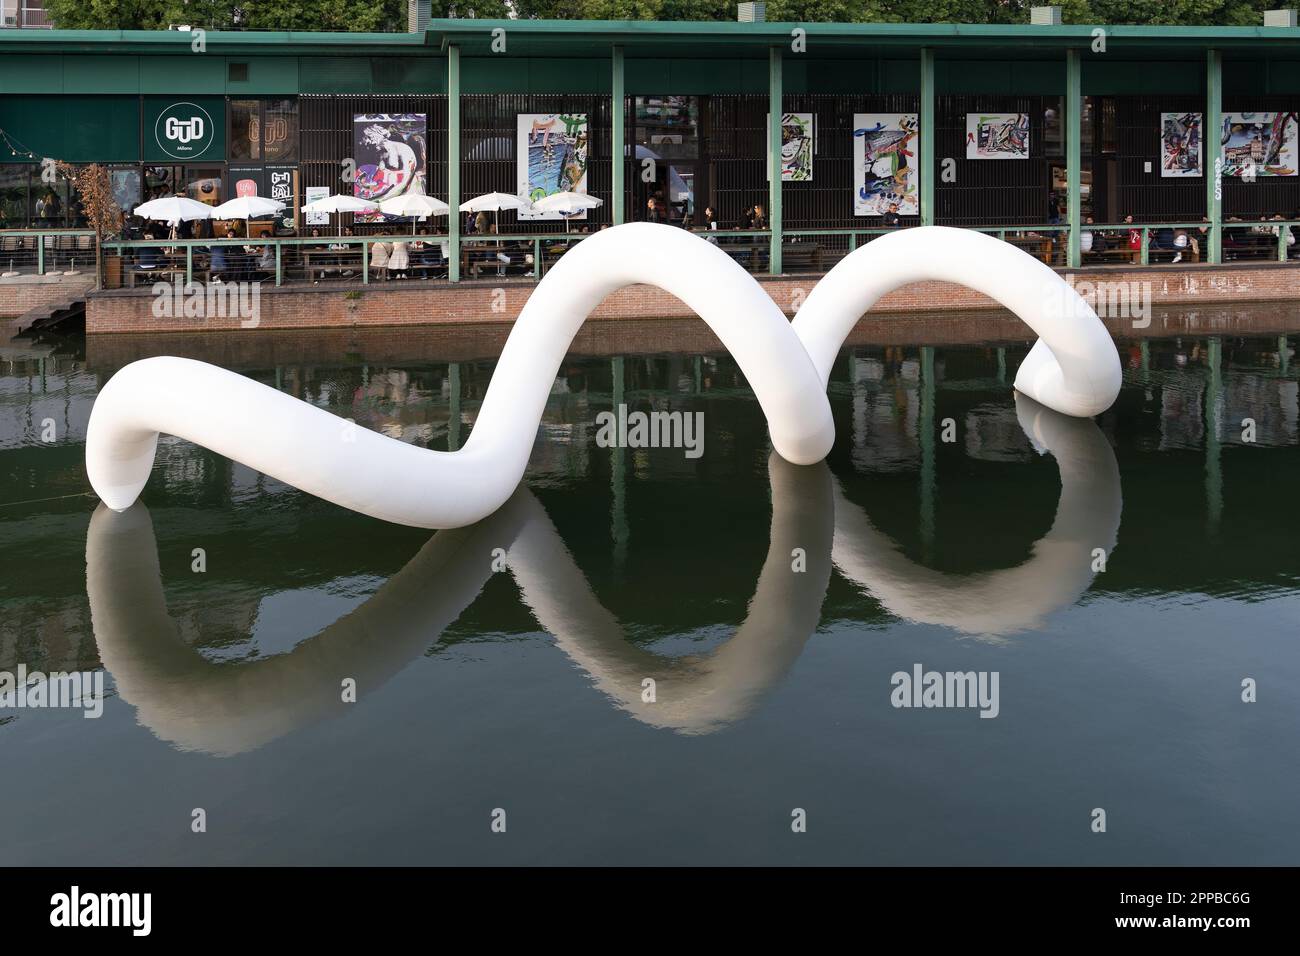 Mailand, Italien. 12. Aug. 2015. Blick auf den Bahnhofszug auf der Expo 2015 Italien. Kredit: MAURO DALLA POZZA/Alamy Live News Stockfoto